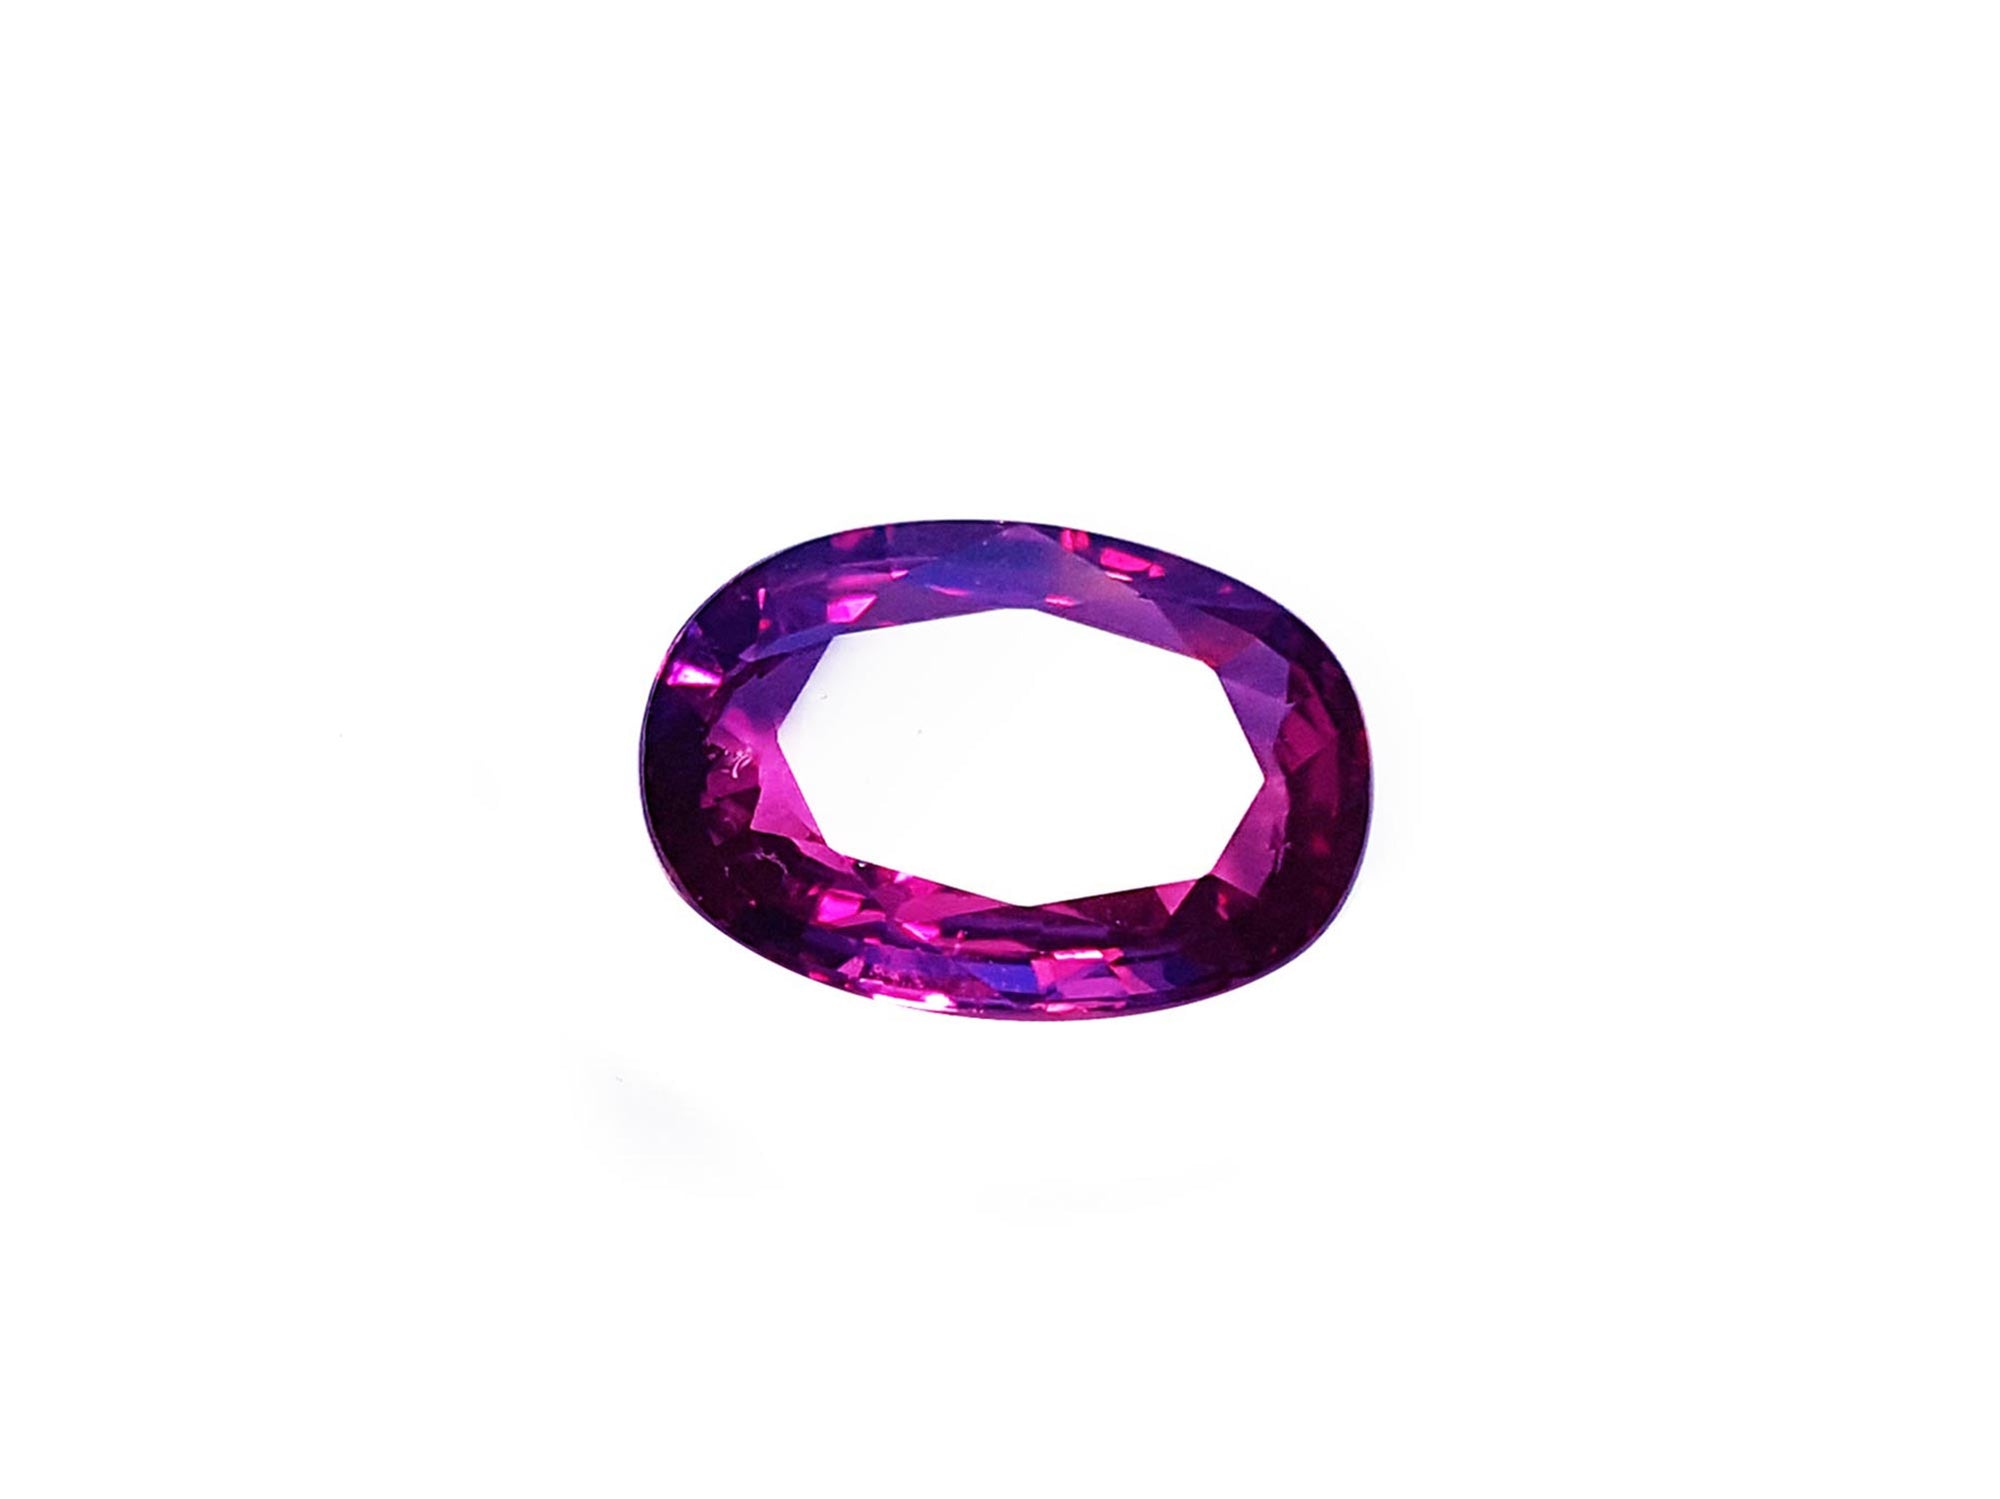 Pink sapphire loose gemstone